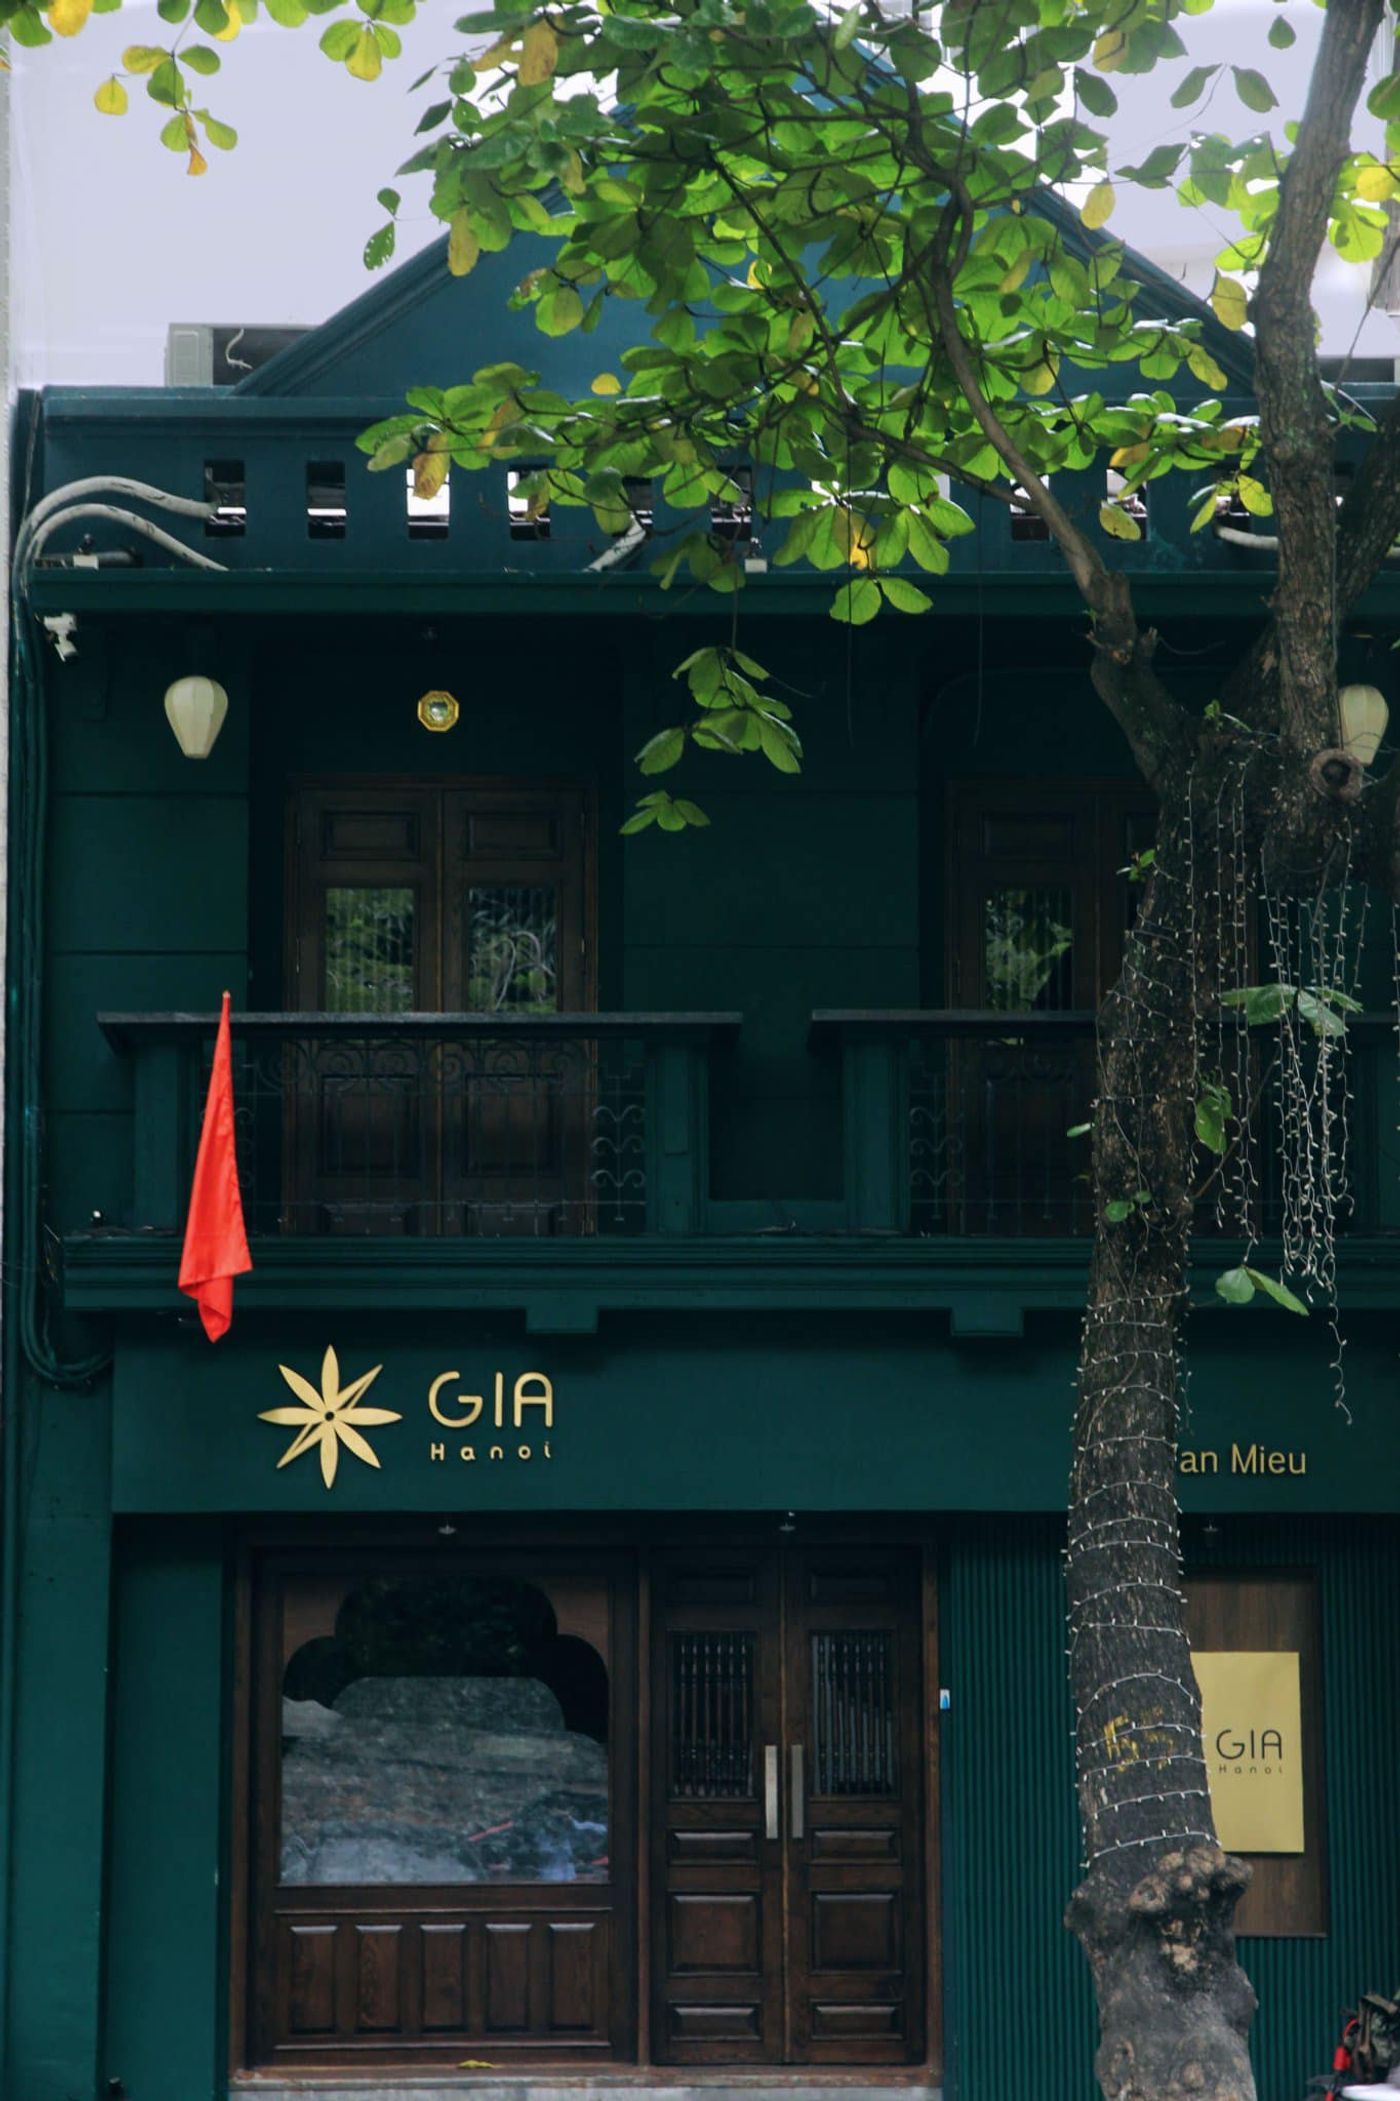 Gia is at 61 Van Mieu Street, Dong Da District, Hanoi. Credit: Photos courtesy of the restaurants